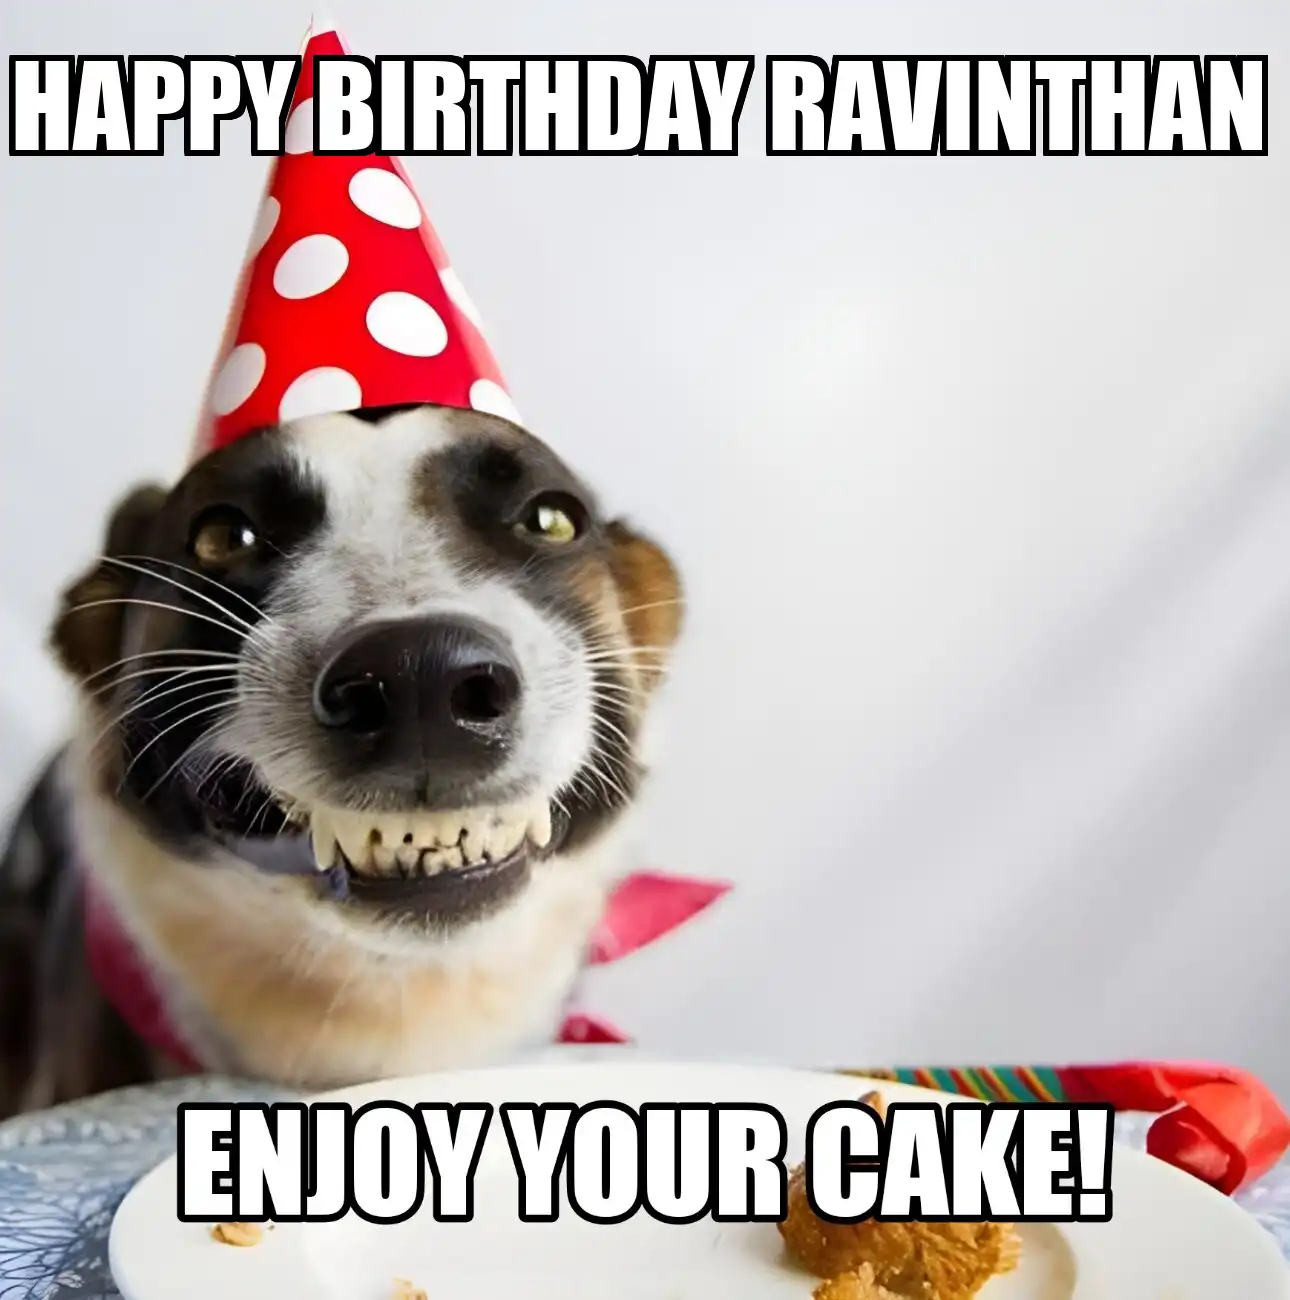 Happy Birthday Ravinthan Enjoy Your Cake Dog Meme